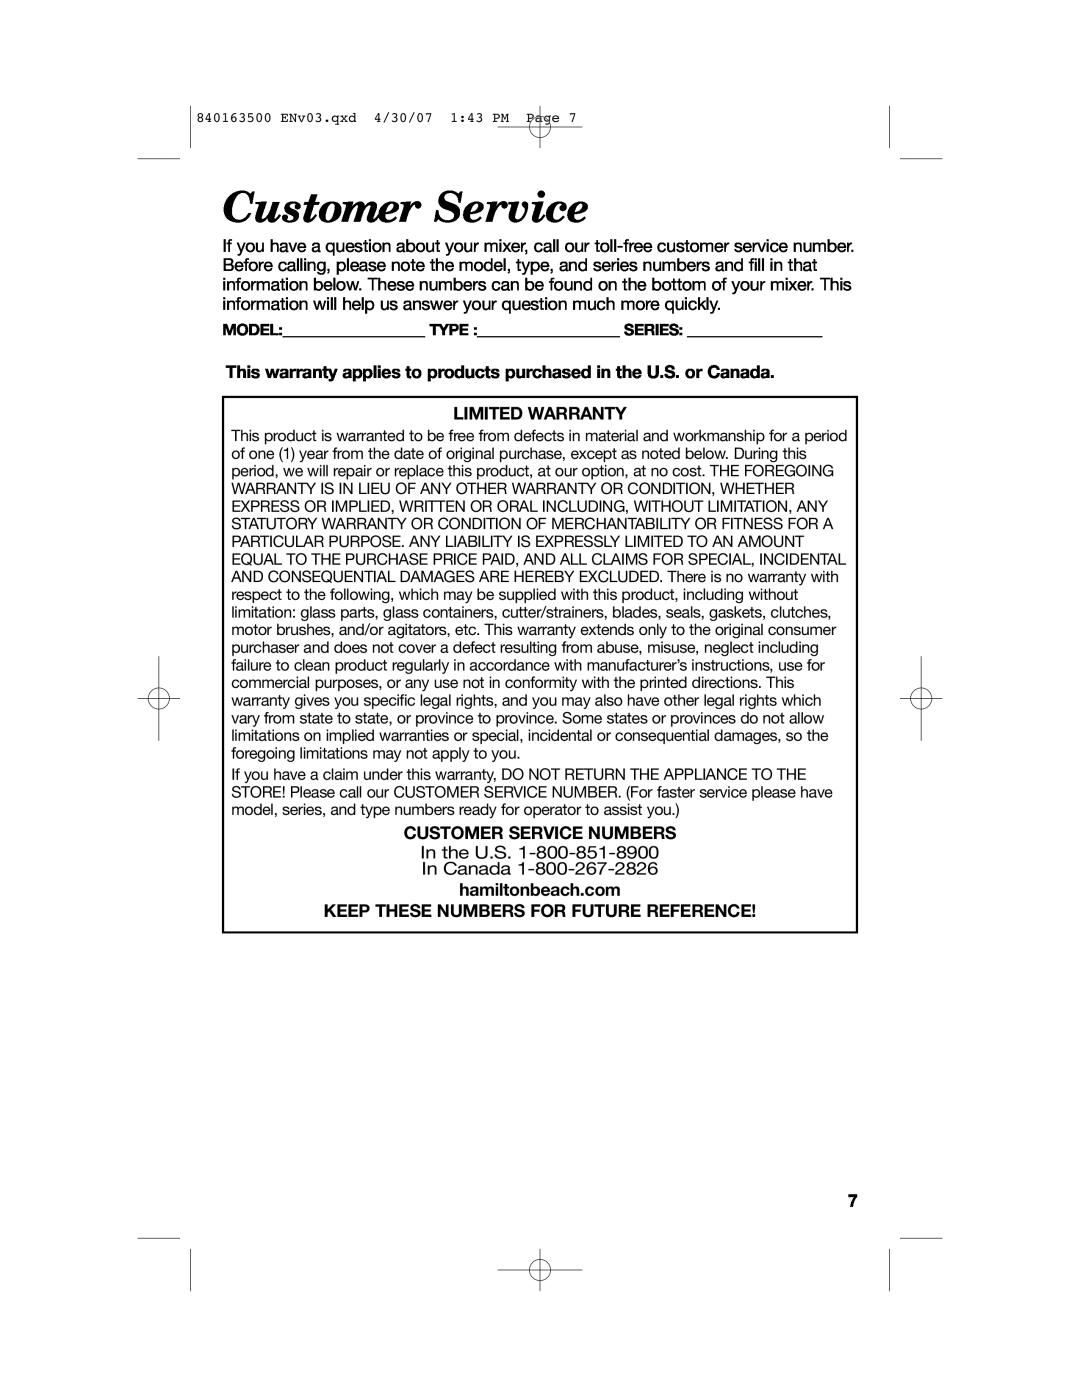 Hamilton Beach 64695N manual Limited Warranty, Customer Service Numbers, hamiltonbeach.com 